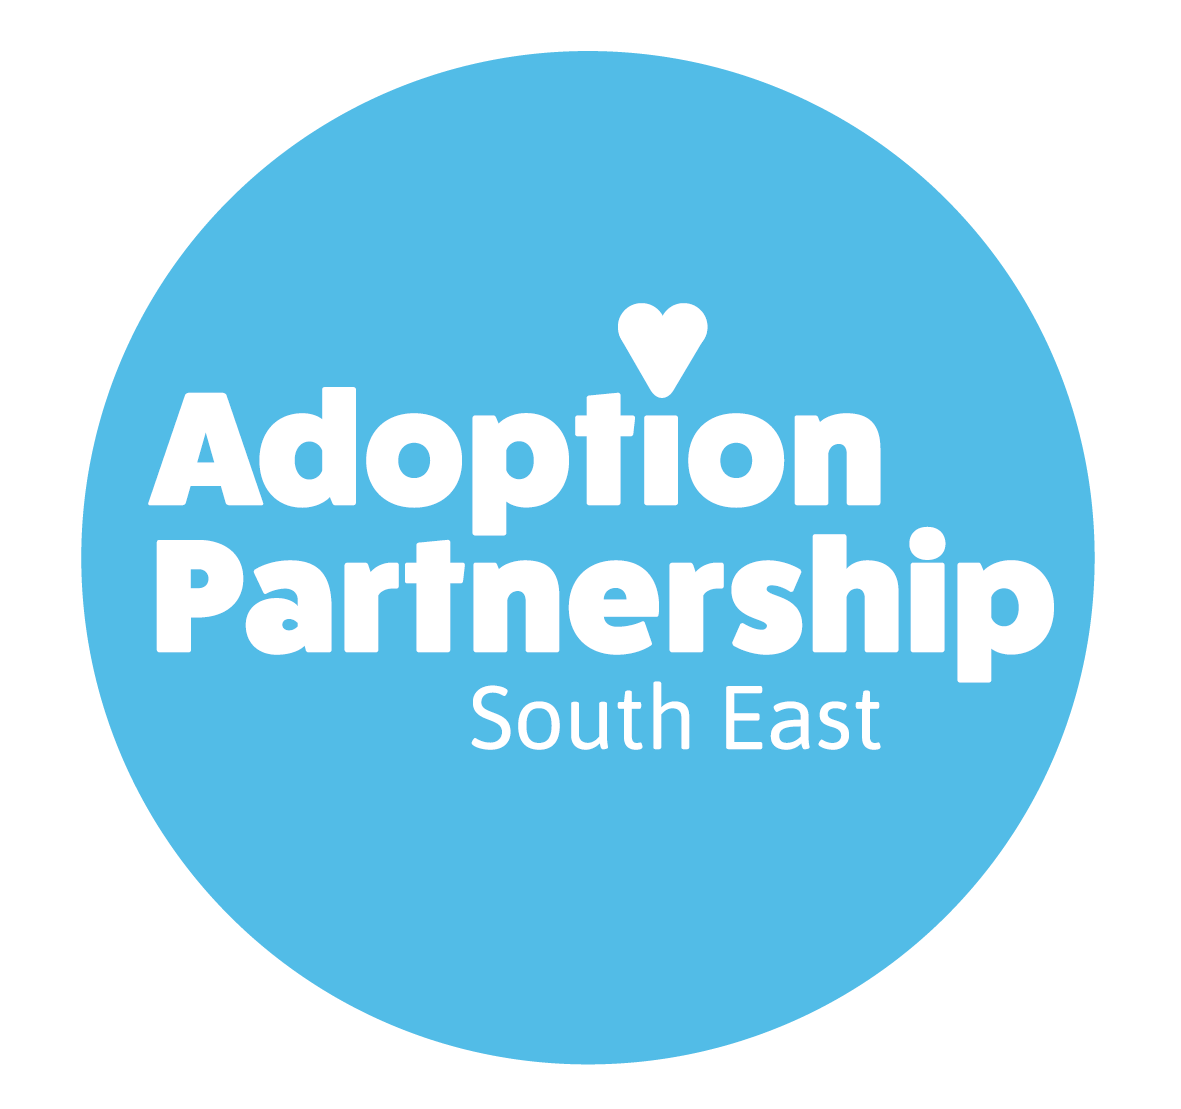 Adoption Partnership South East